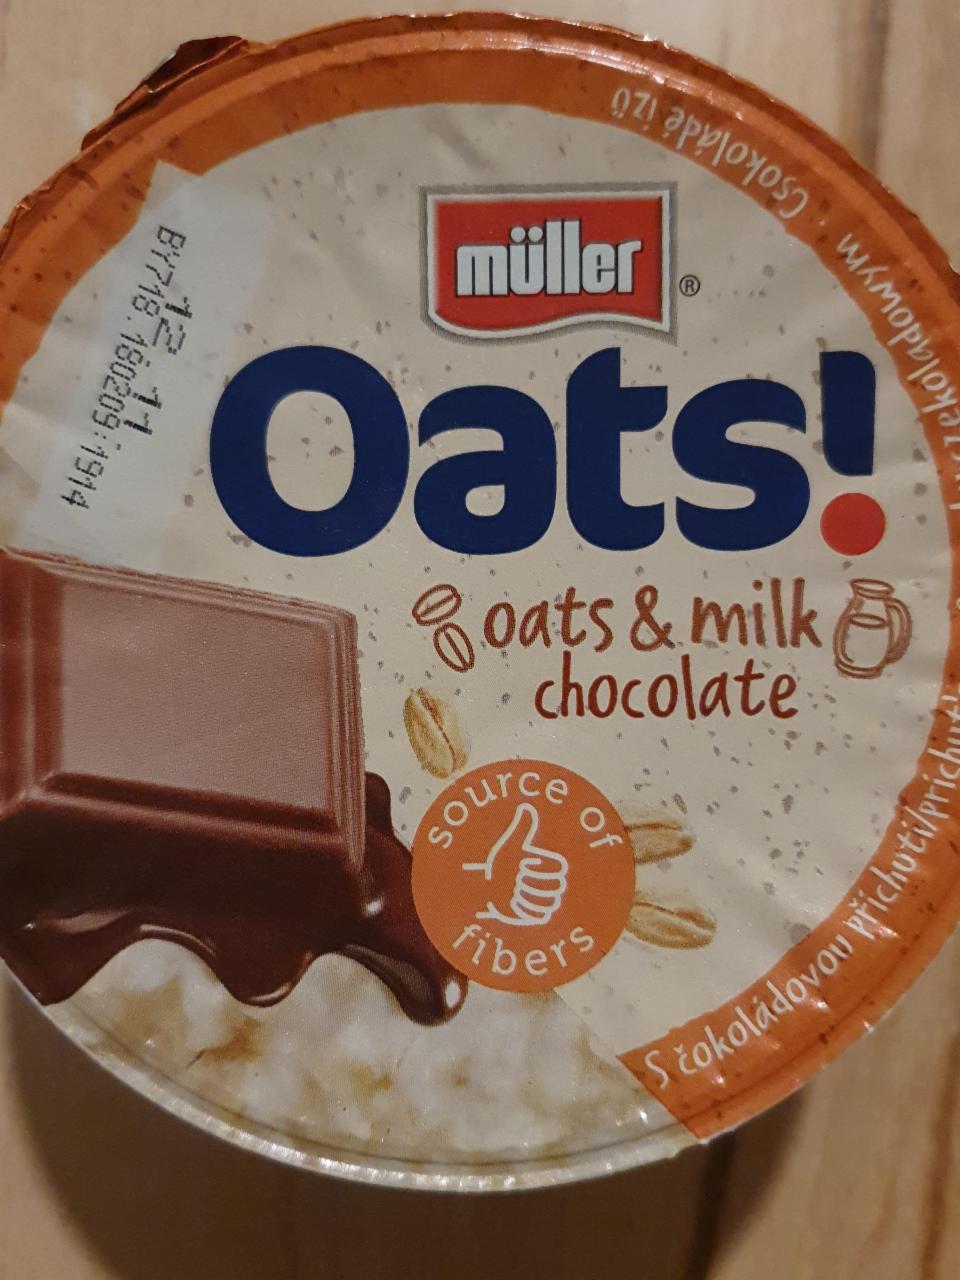 Fotografie - Muller Oats! oats & milk chocolate